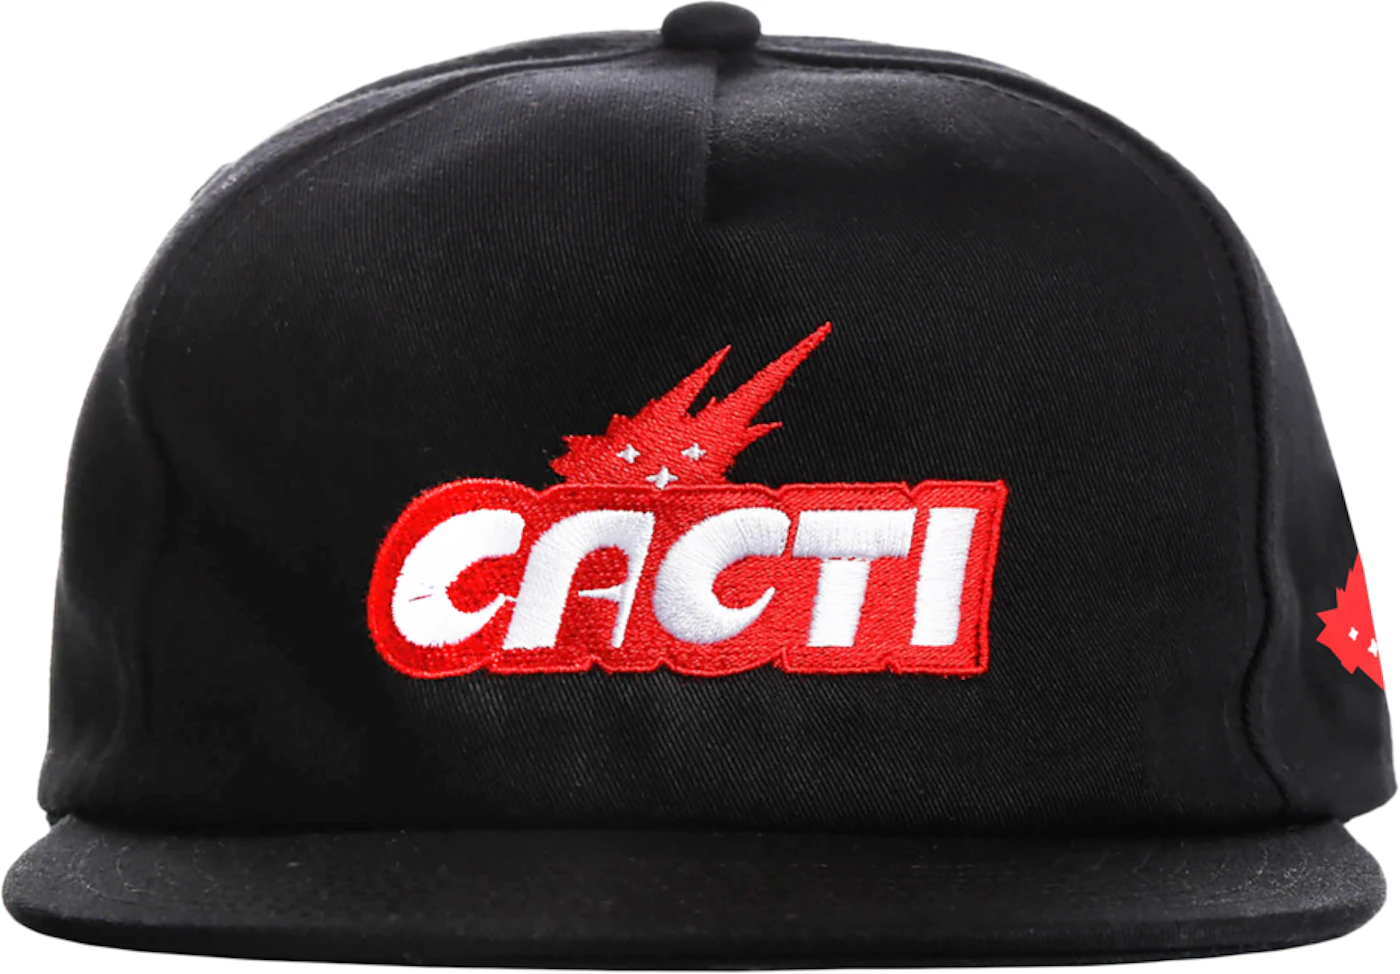 Travis Scott Cacti Logo Hat Black